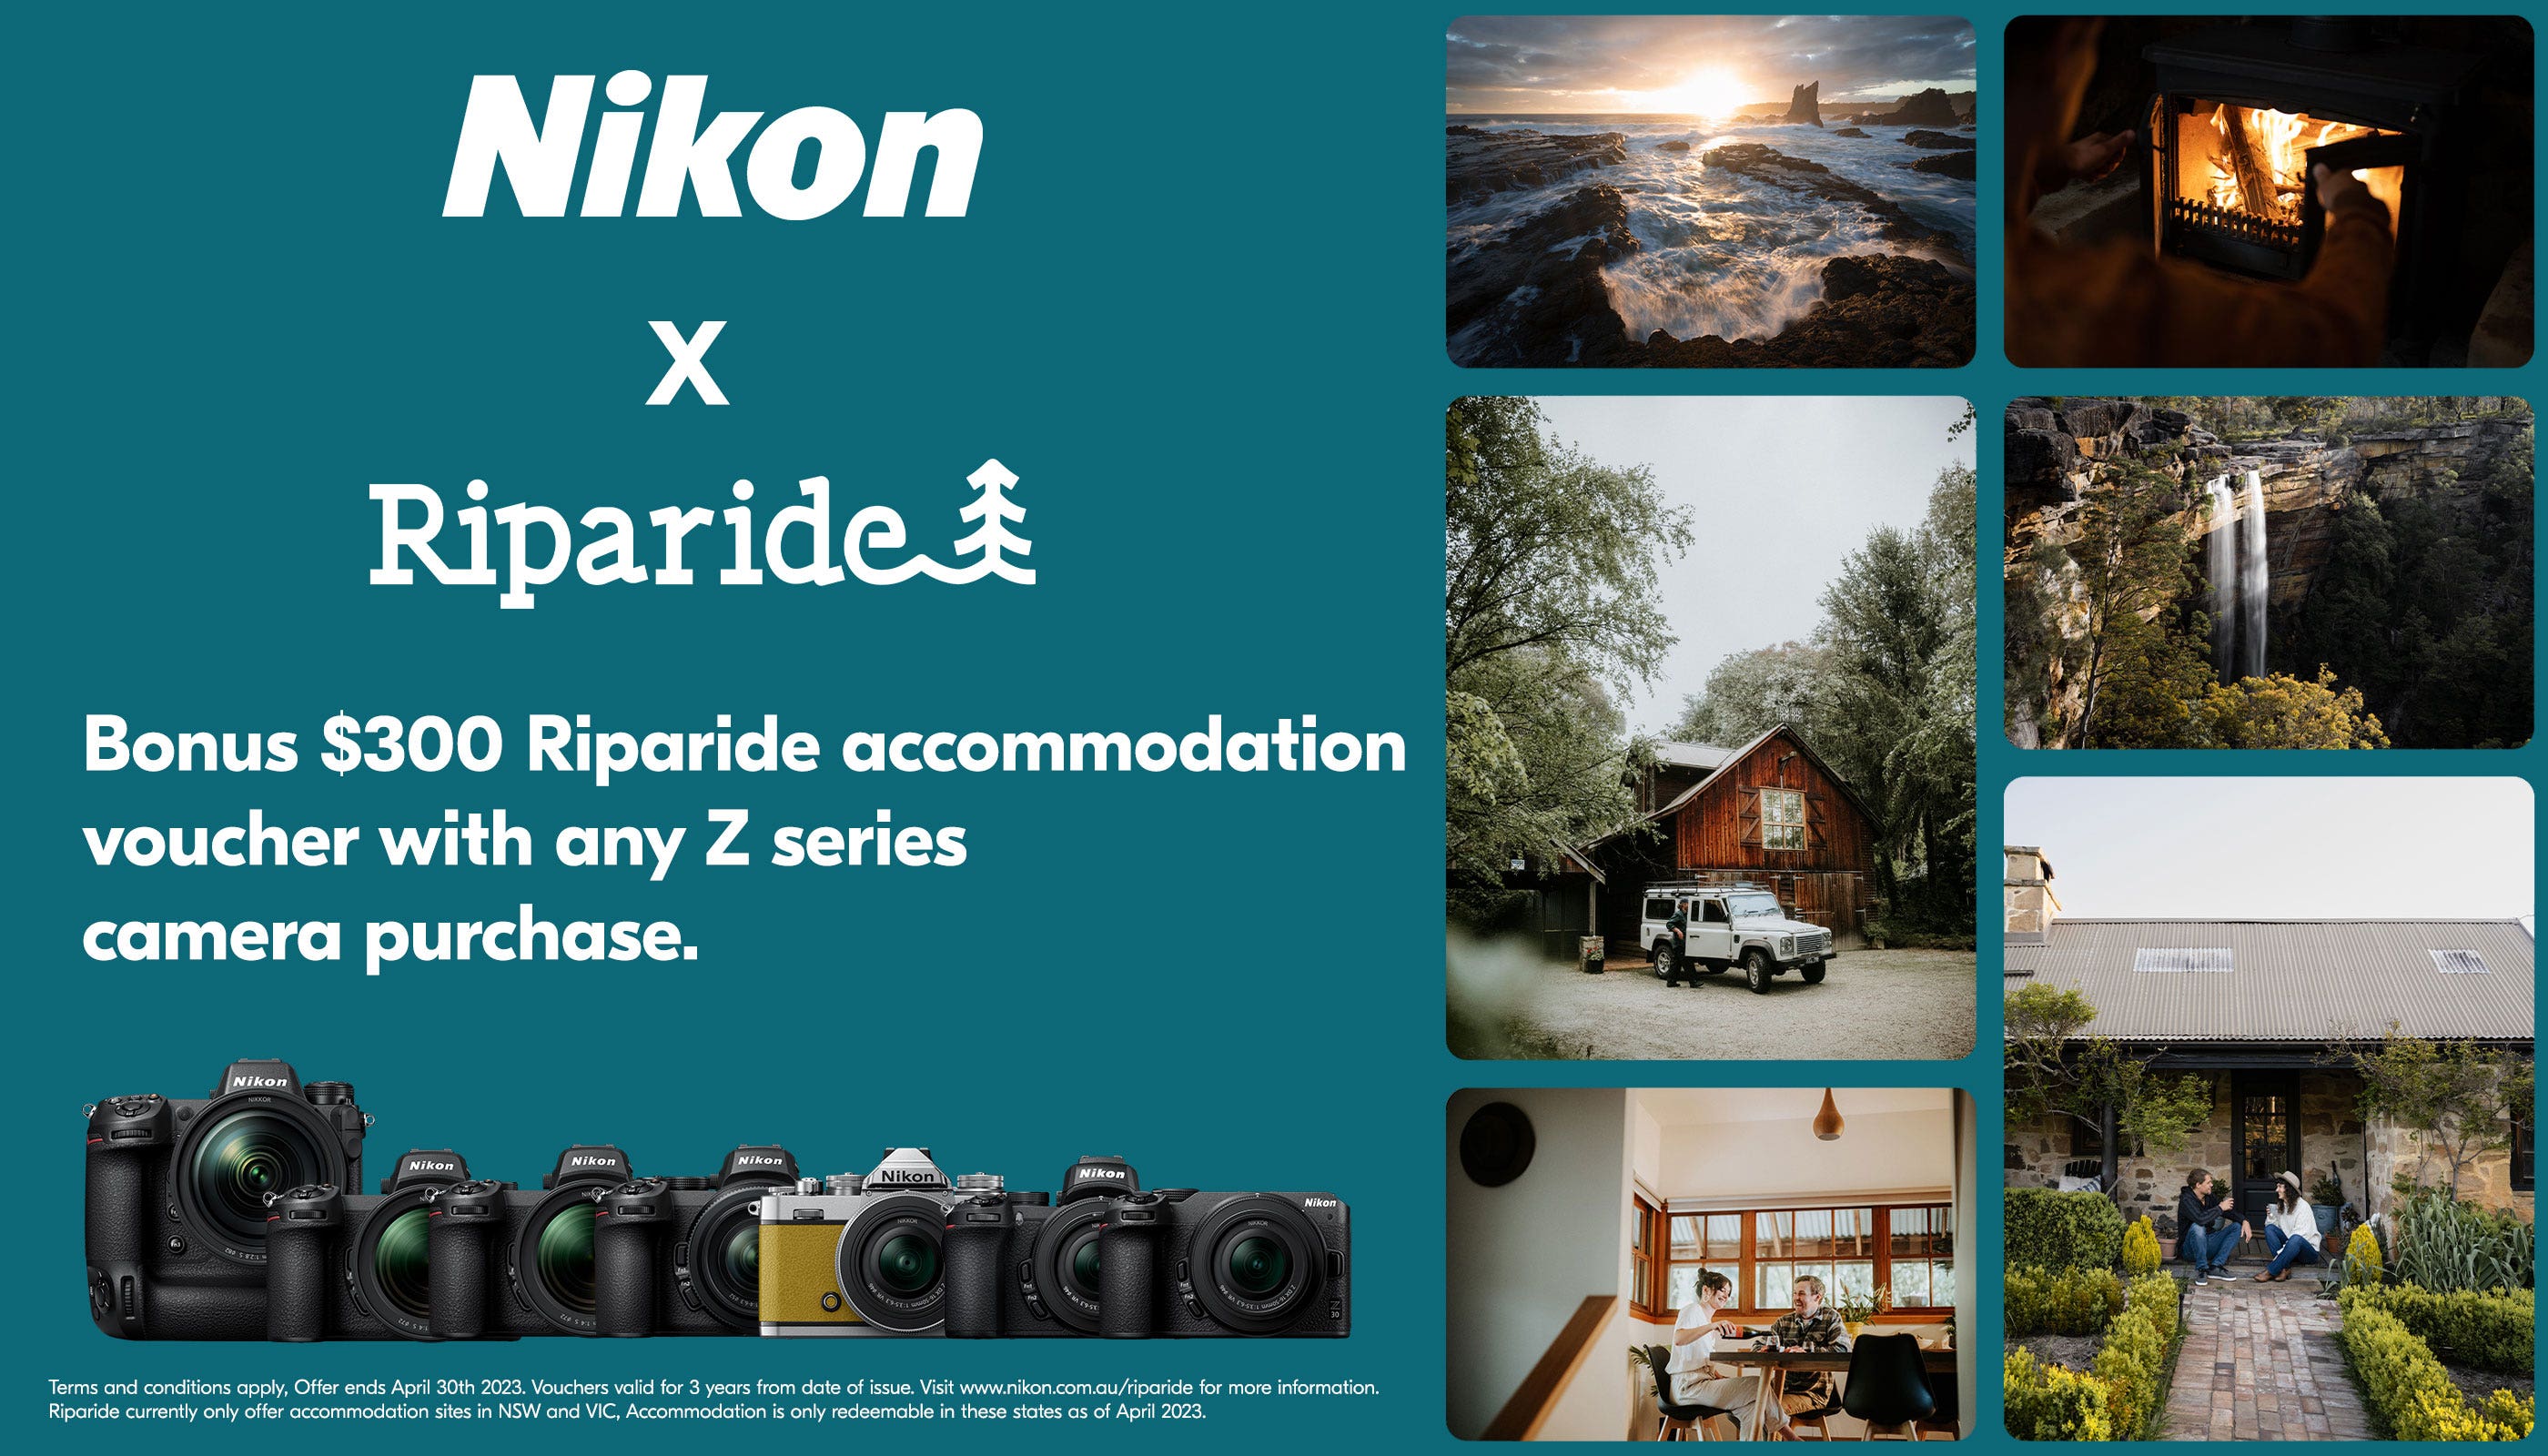 Riparide x Nikon Promotion, April 2023 | Nikon Cameras, Lenses & Accessories